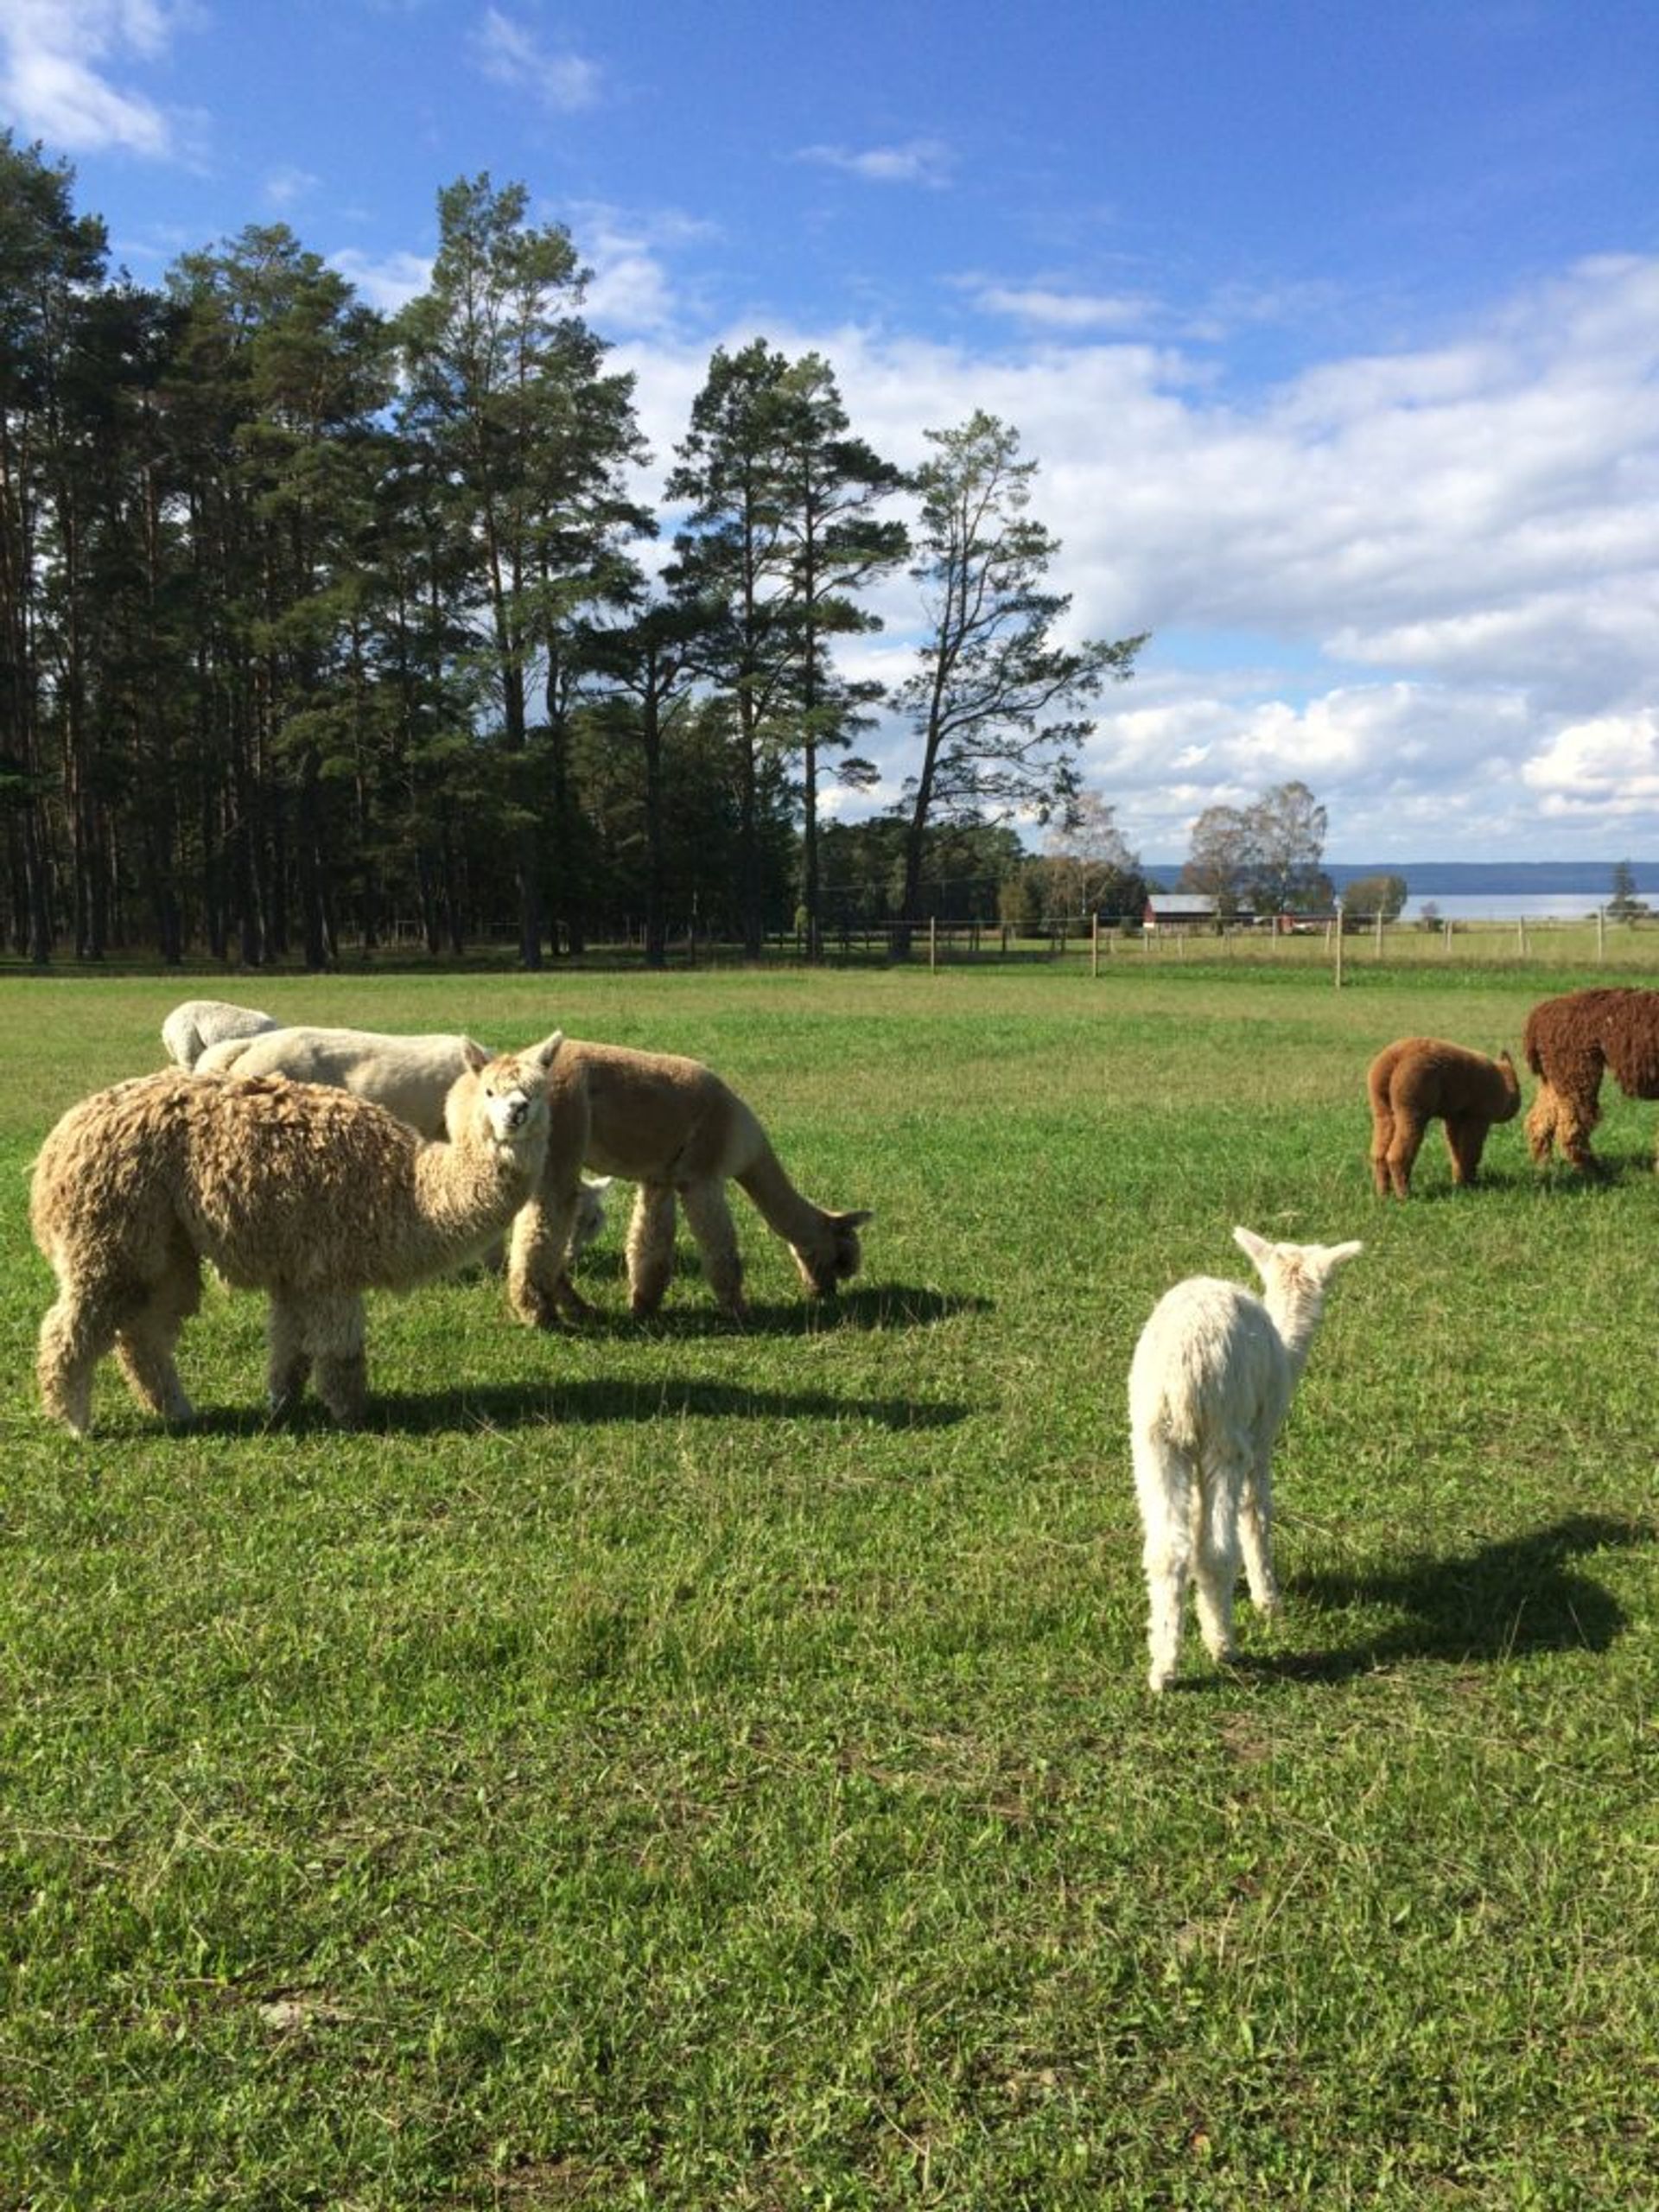 Several alpacas grazing in a field.